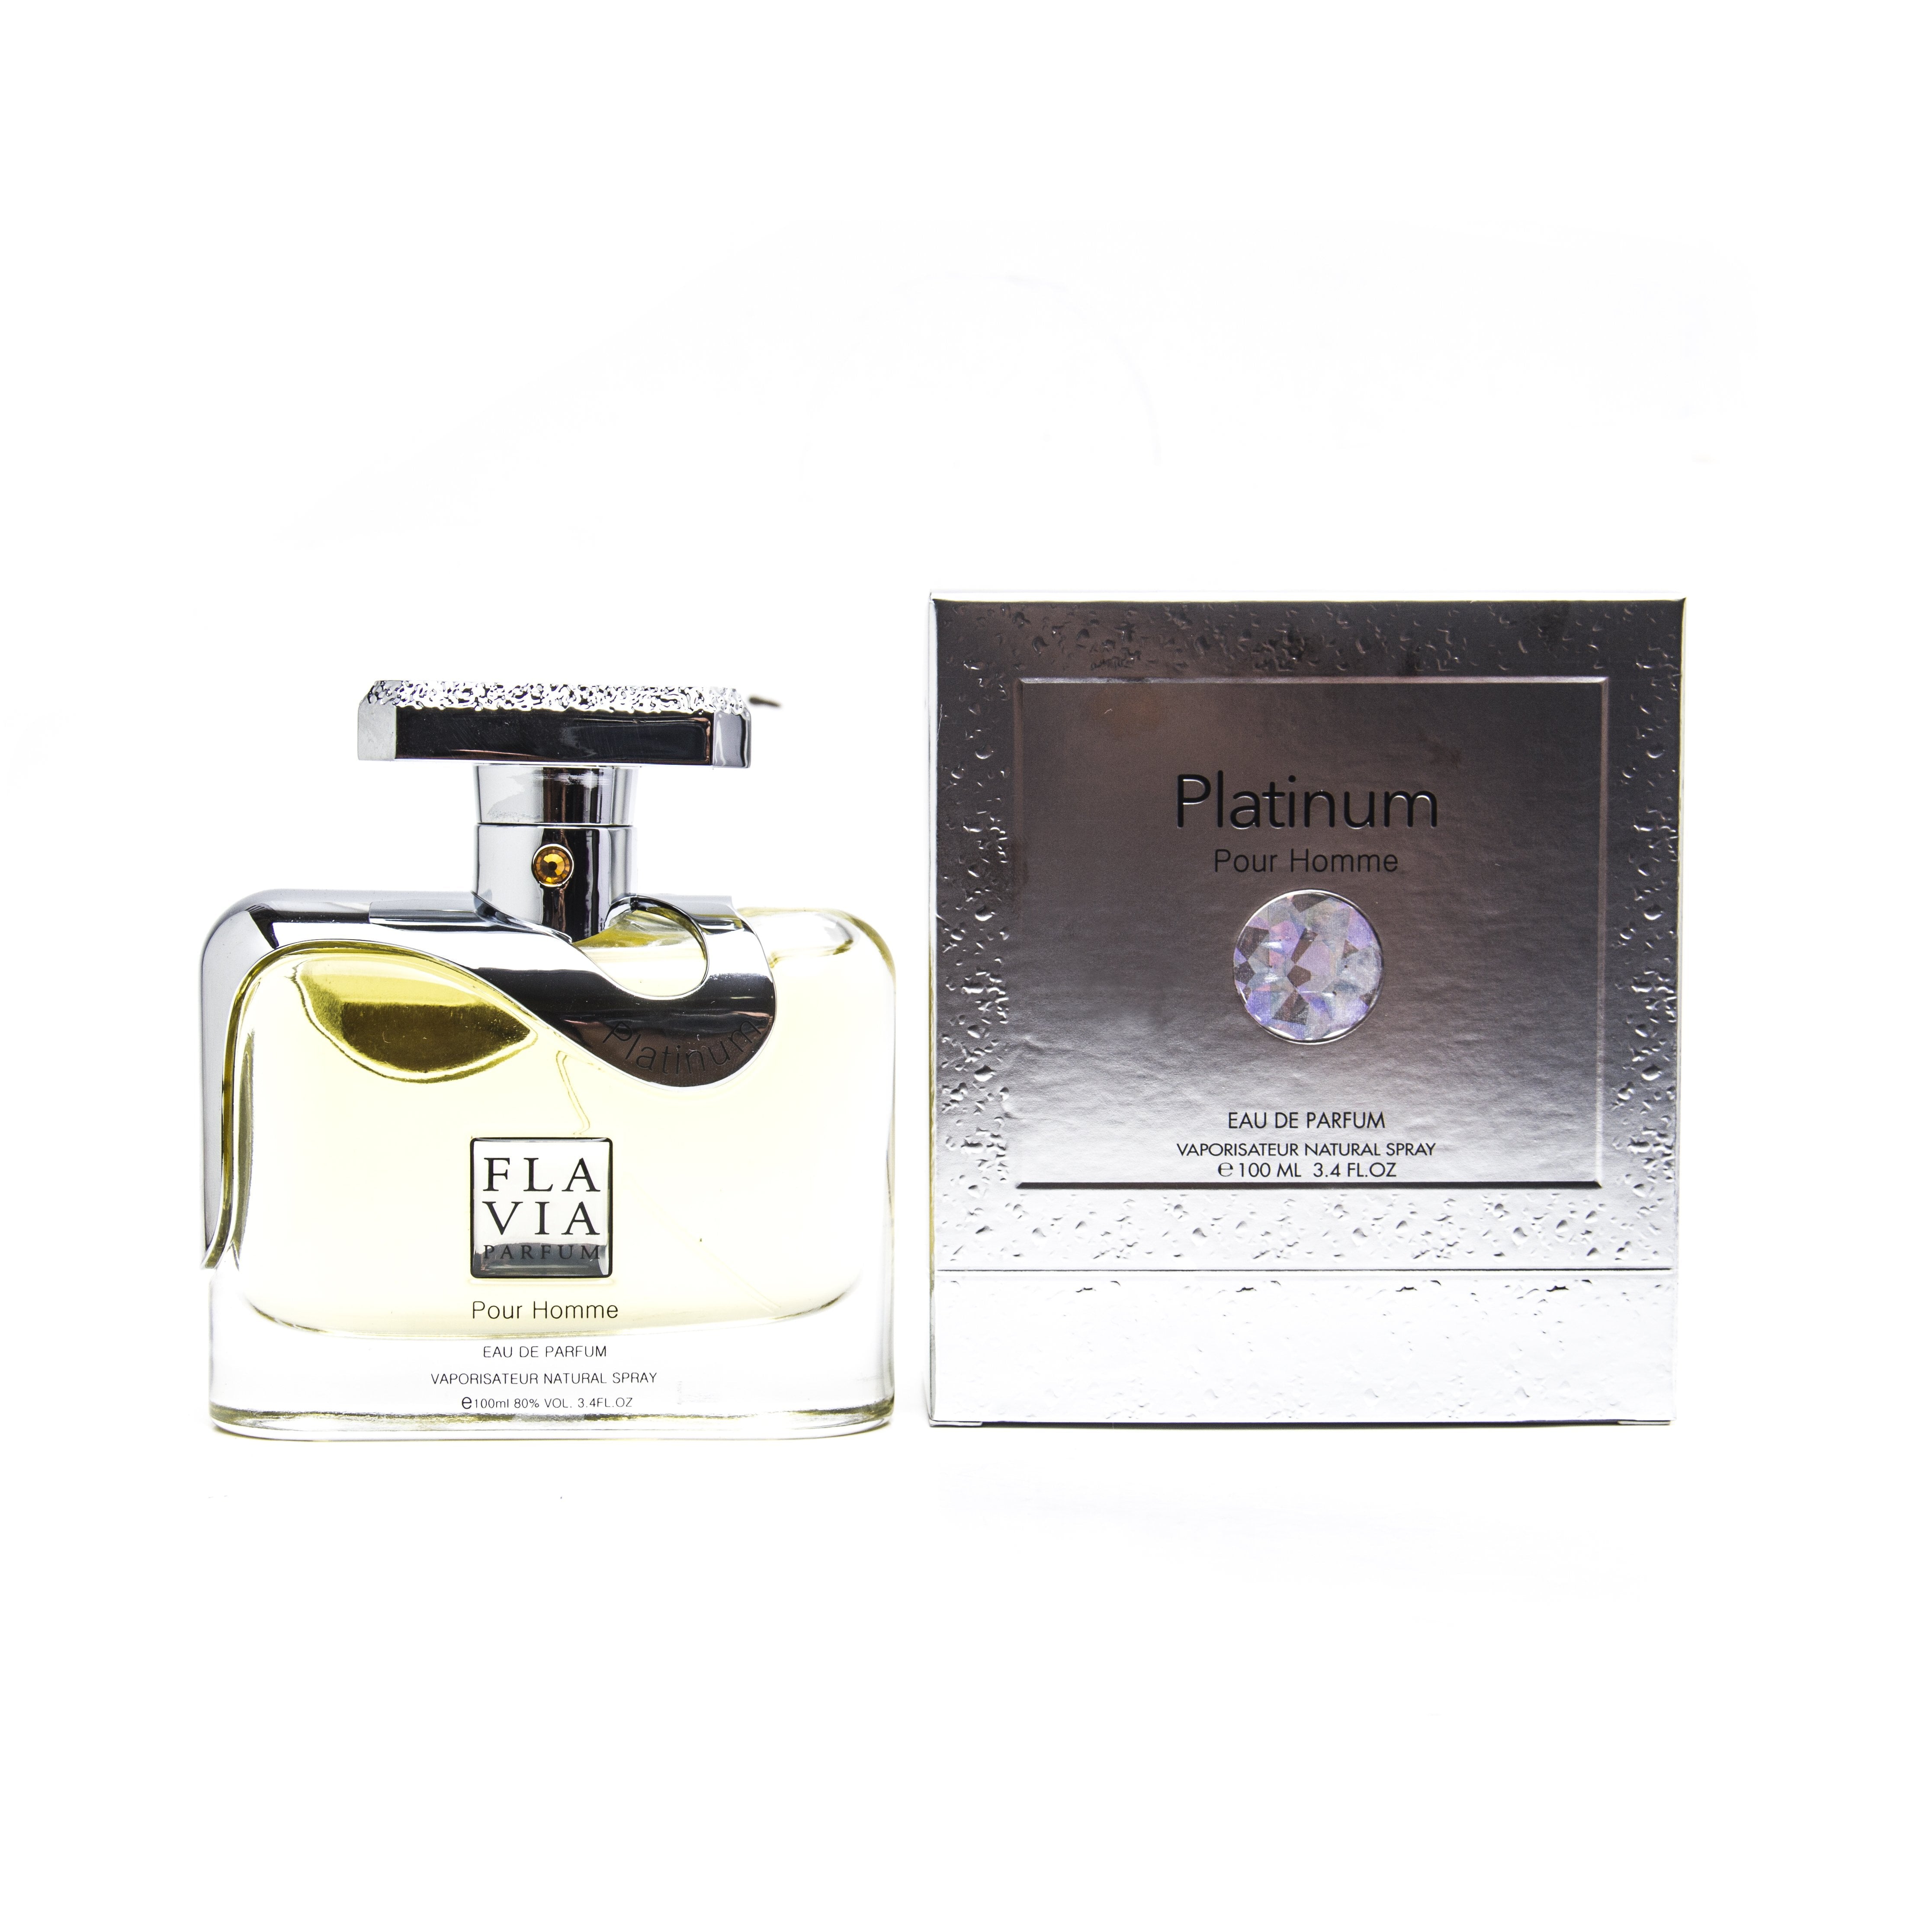 Flavia Men's Platinum EDP Spray 3.4 oz Fragrances 6294015106169 -  Fragrances & Beauty, Platinum - Jomashop